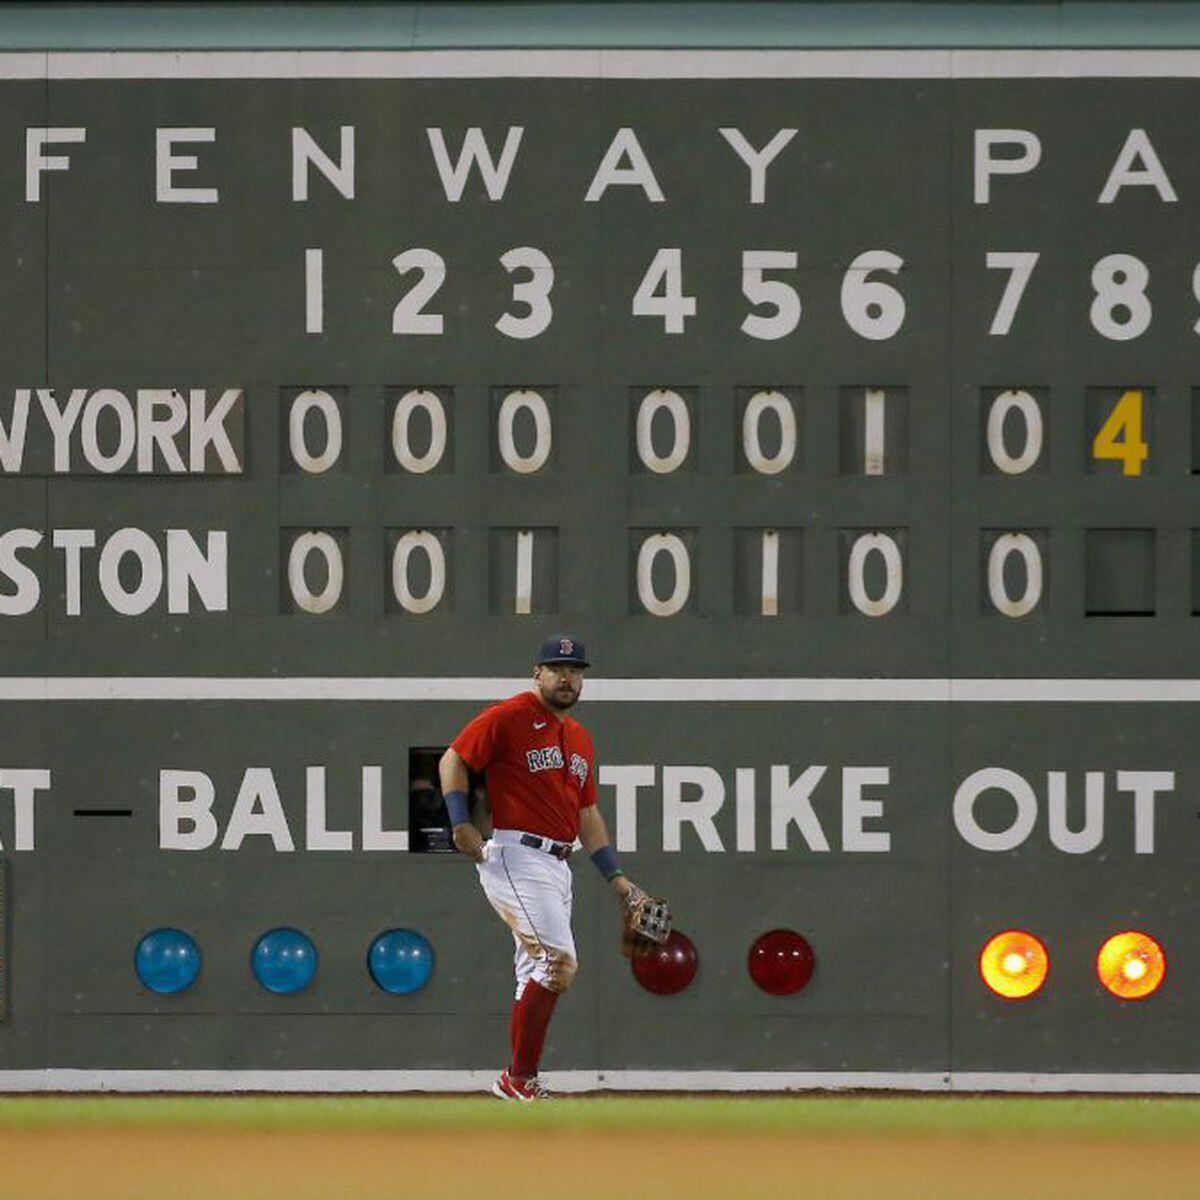 Enrique Hernandez #5 Texas Rangers at Boston Red Sox September 1